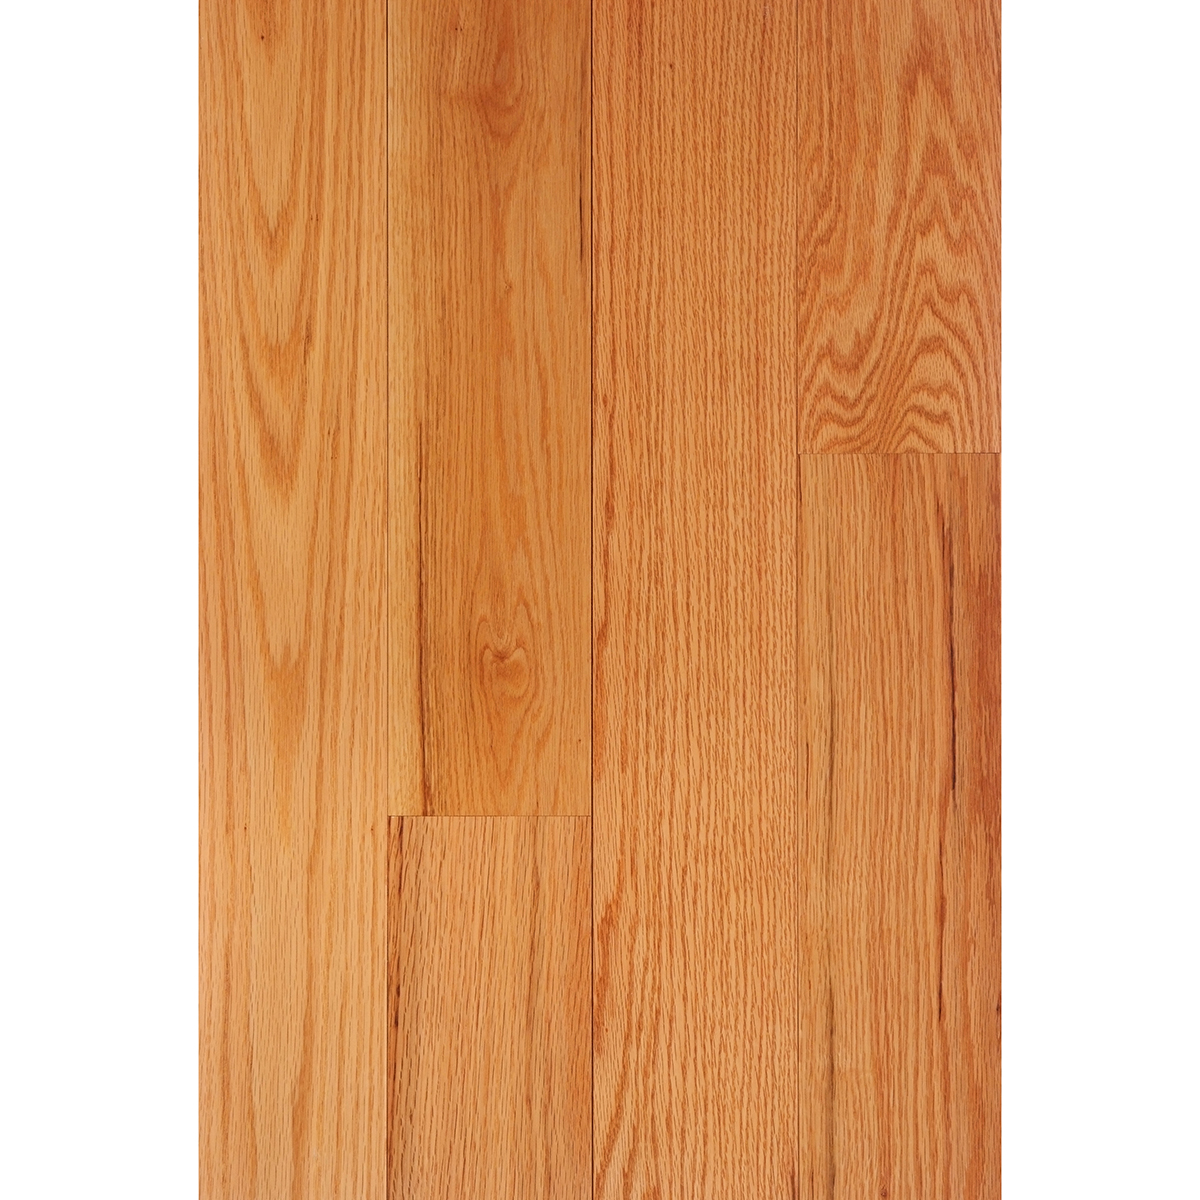 Red Oak Select Grade Flooring, 3 4 Prefinished Oak Hardwood Flooring